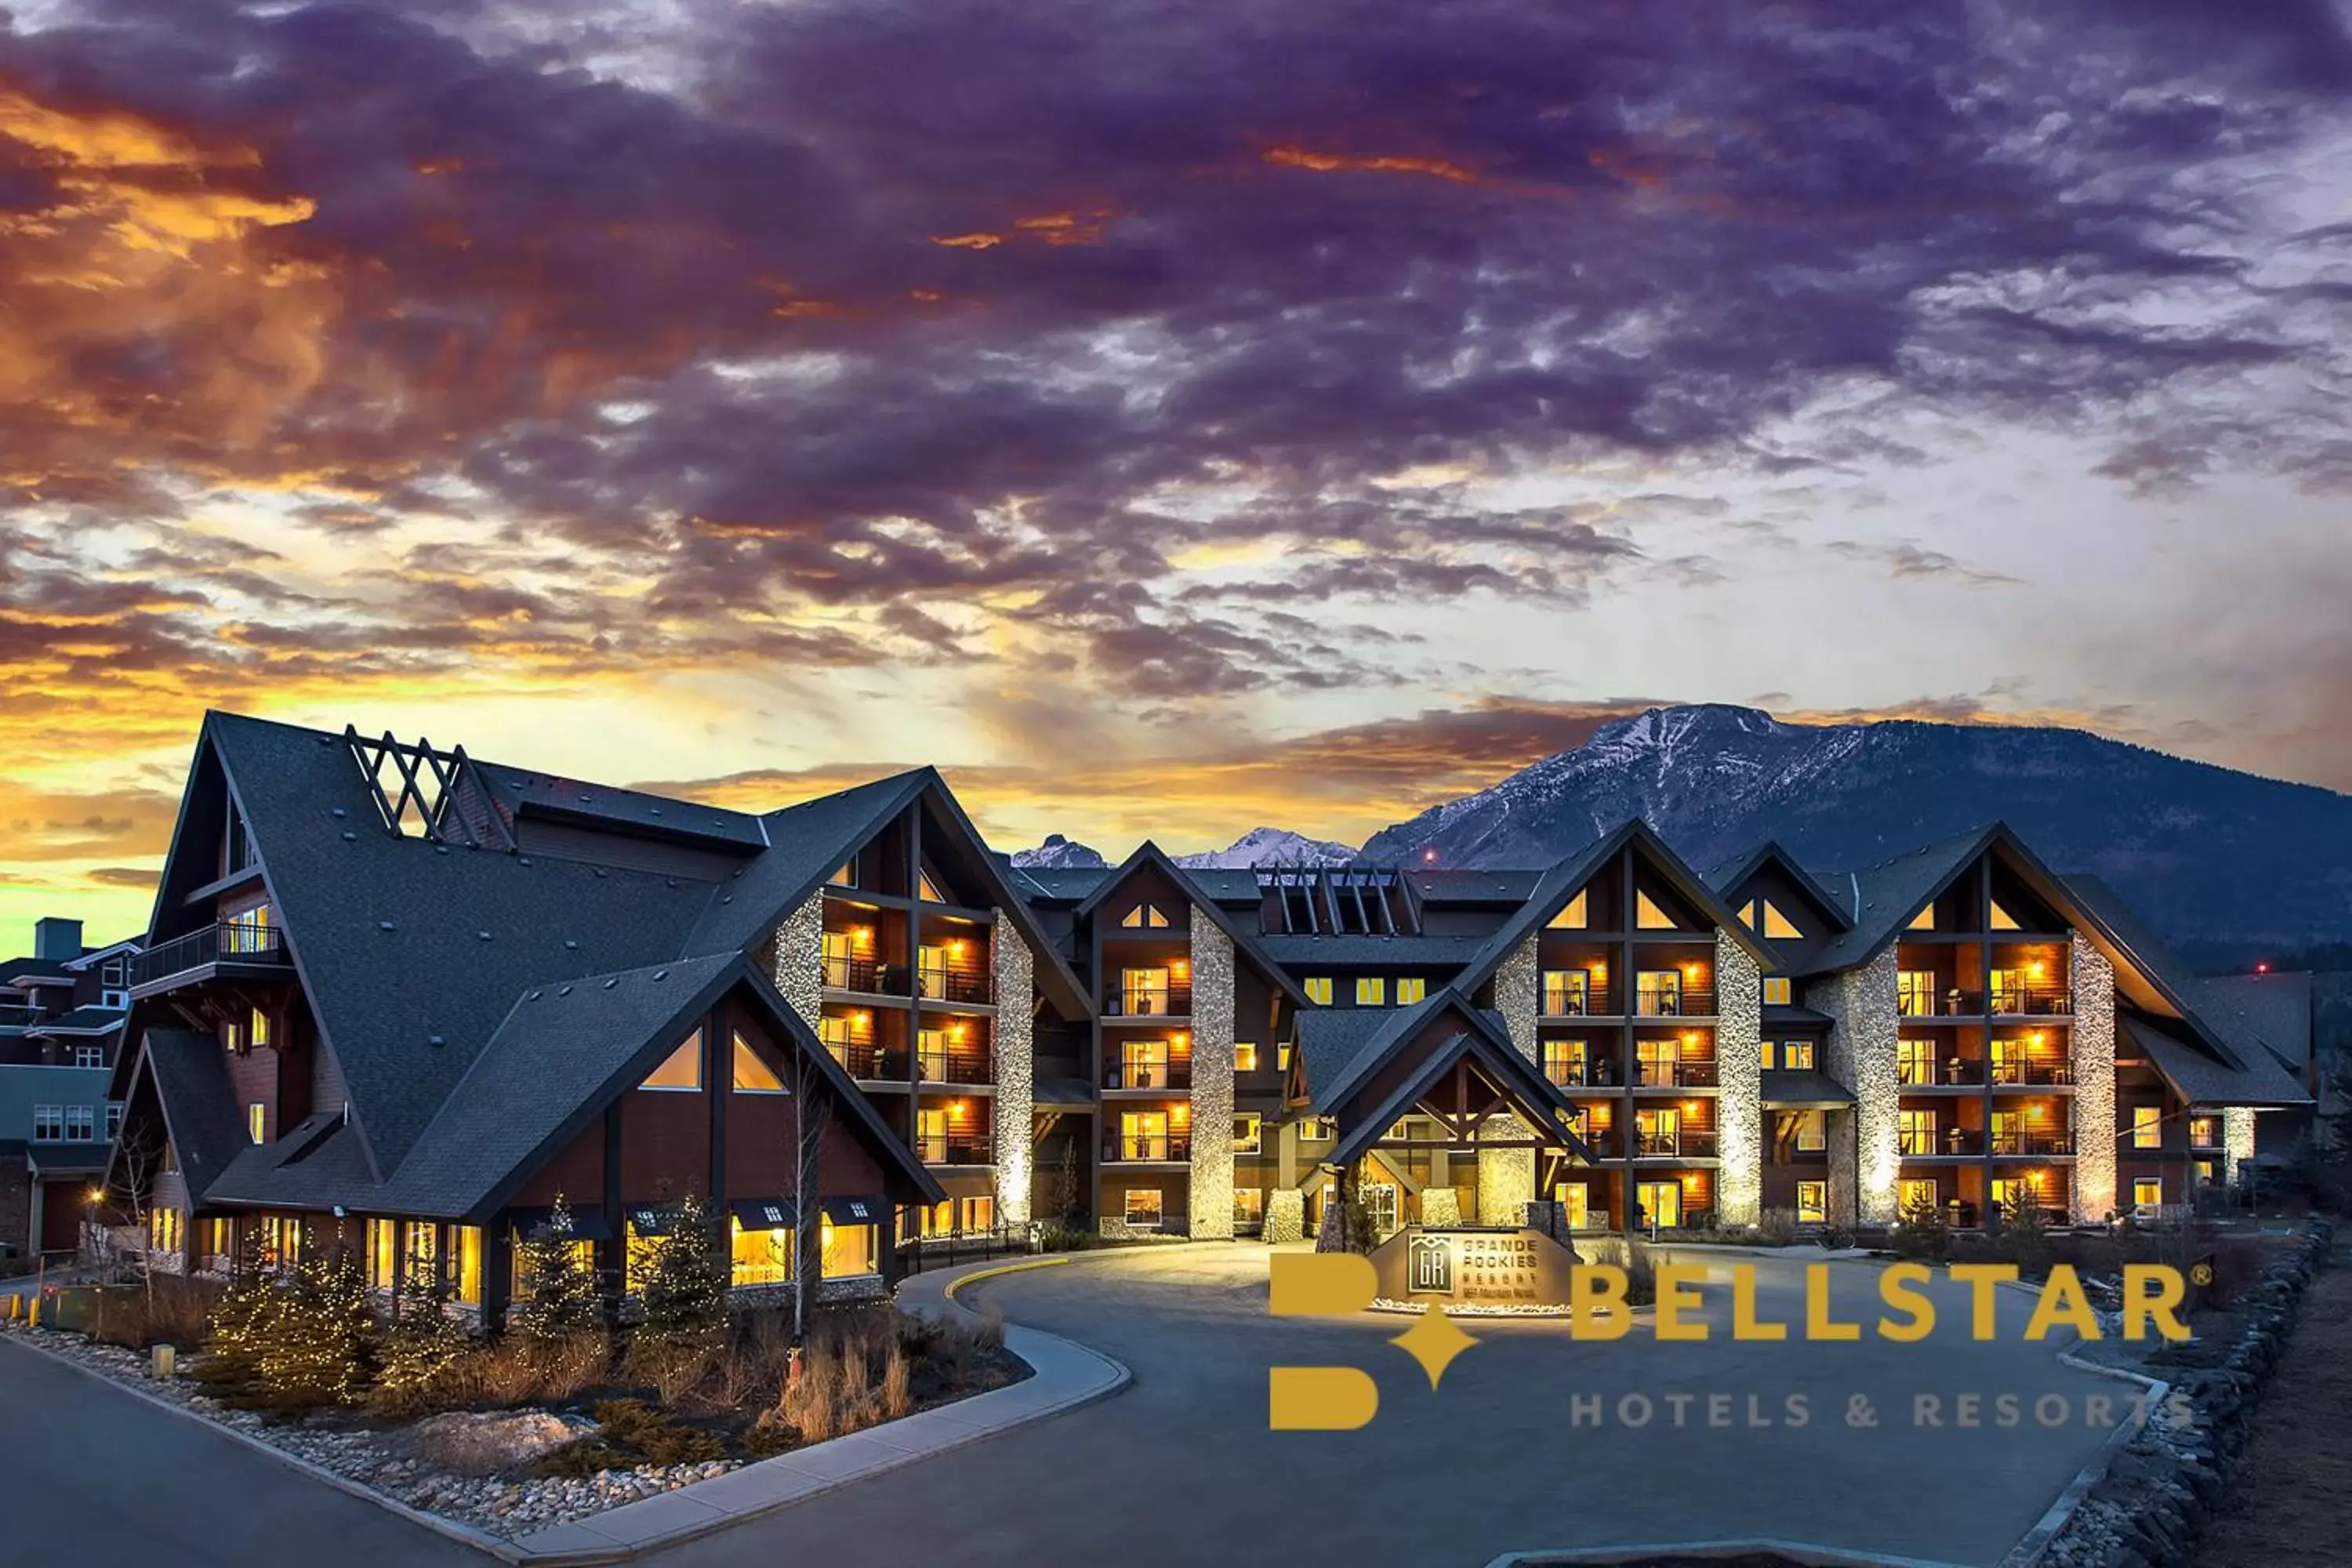 Property Building in Grande Rockies Resort-Bellstar Hotels & Resorts